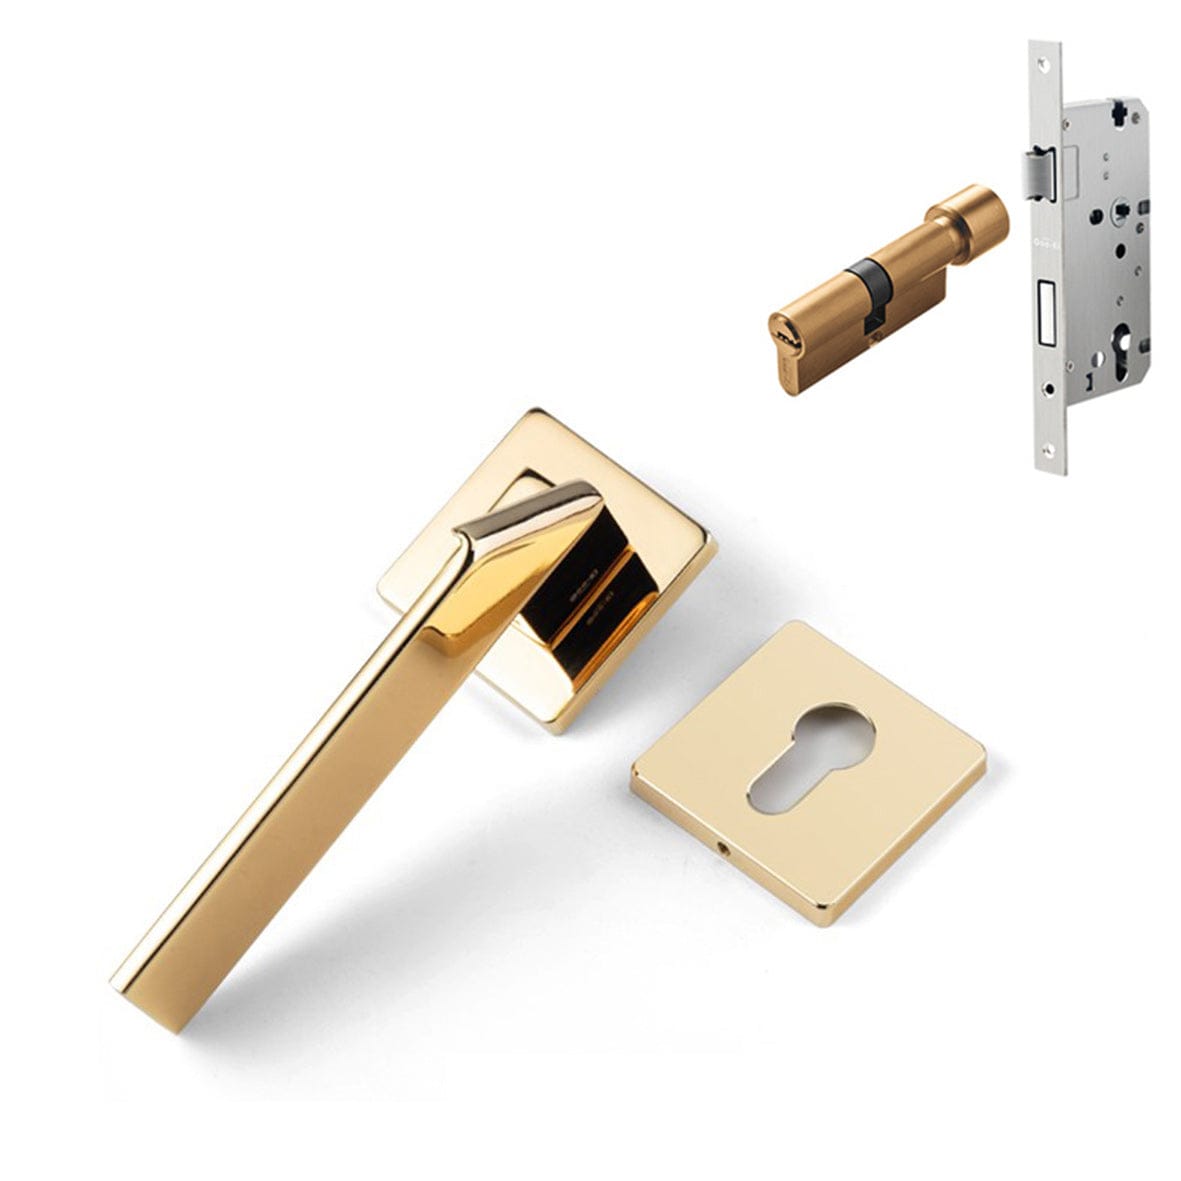 Goo-Ki Polished Gold / All Set Square Space Folding Door Lock Minimalist Interior Door Security Mute Door Lock